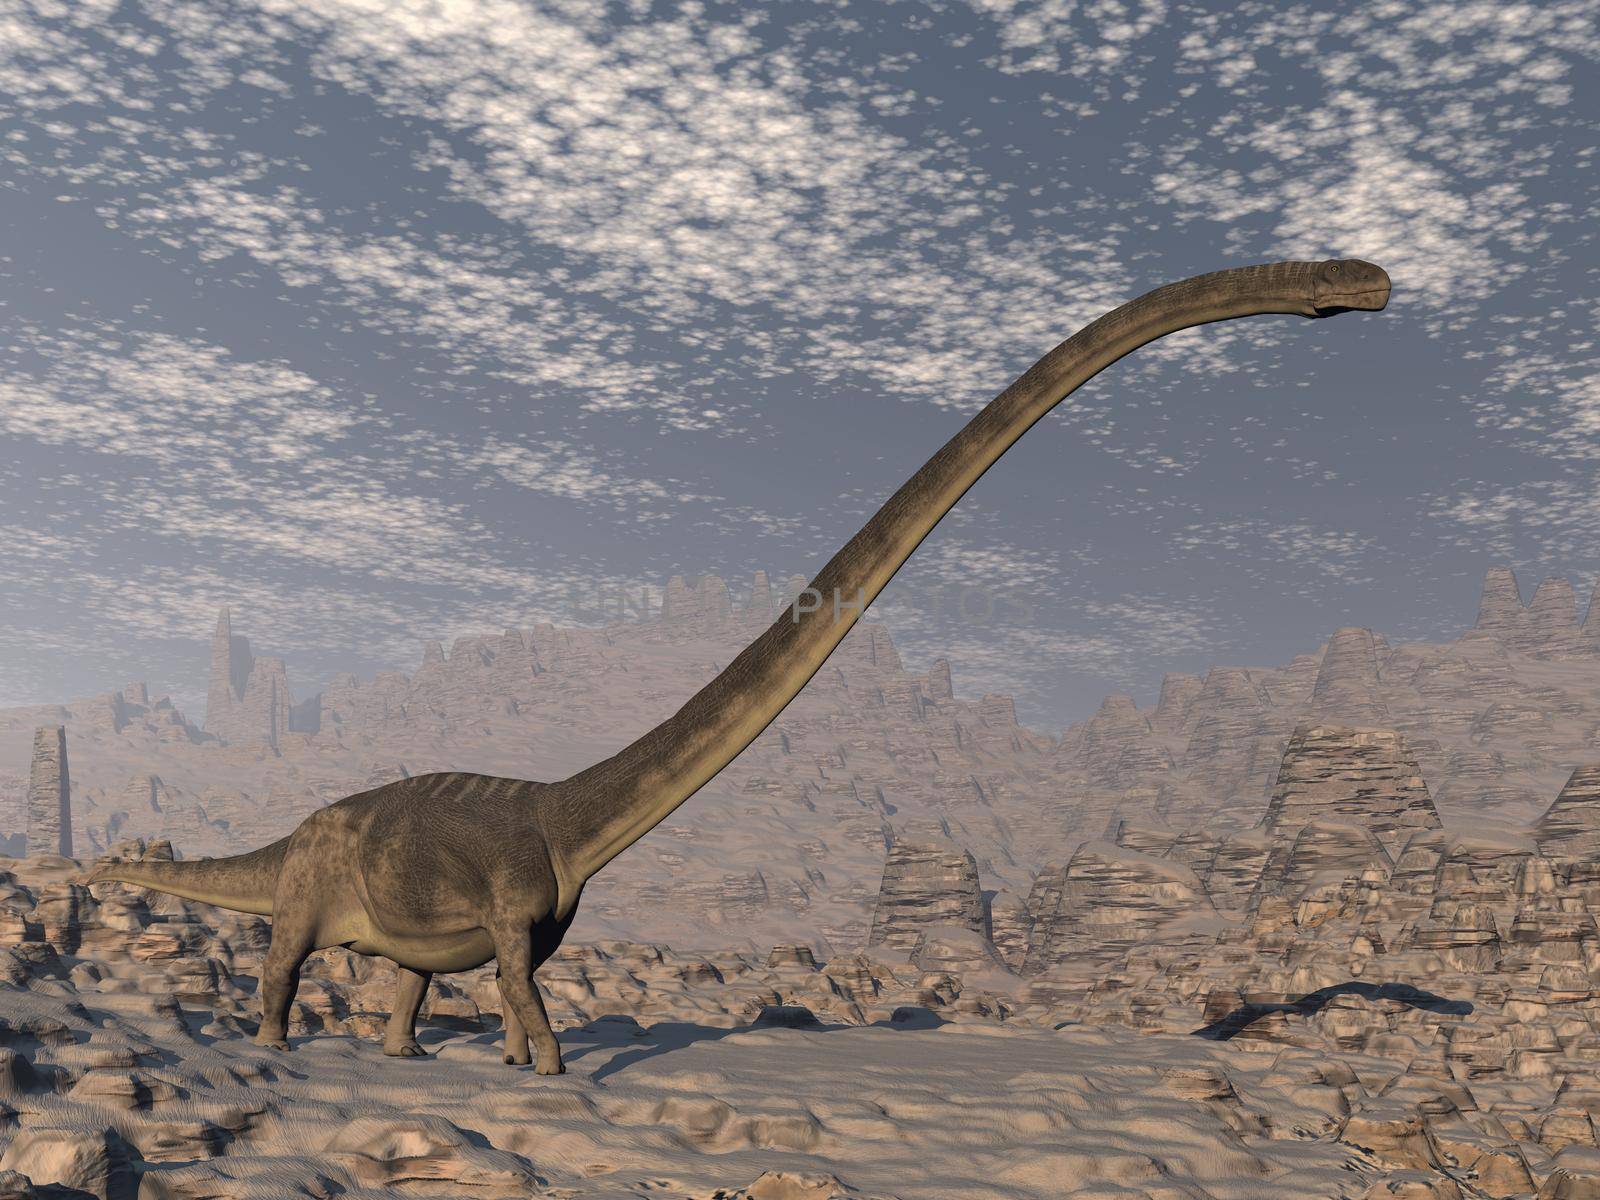 Omeisaurus dinosaur in the desert - 3D render by Elenaphotos21